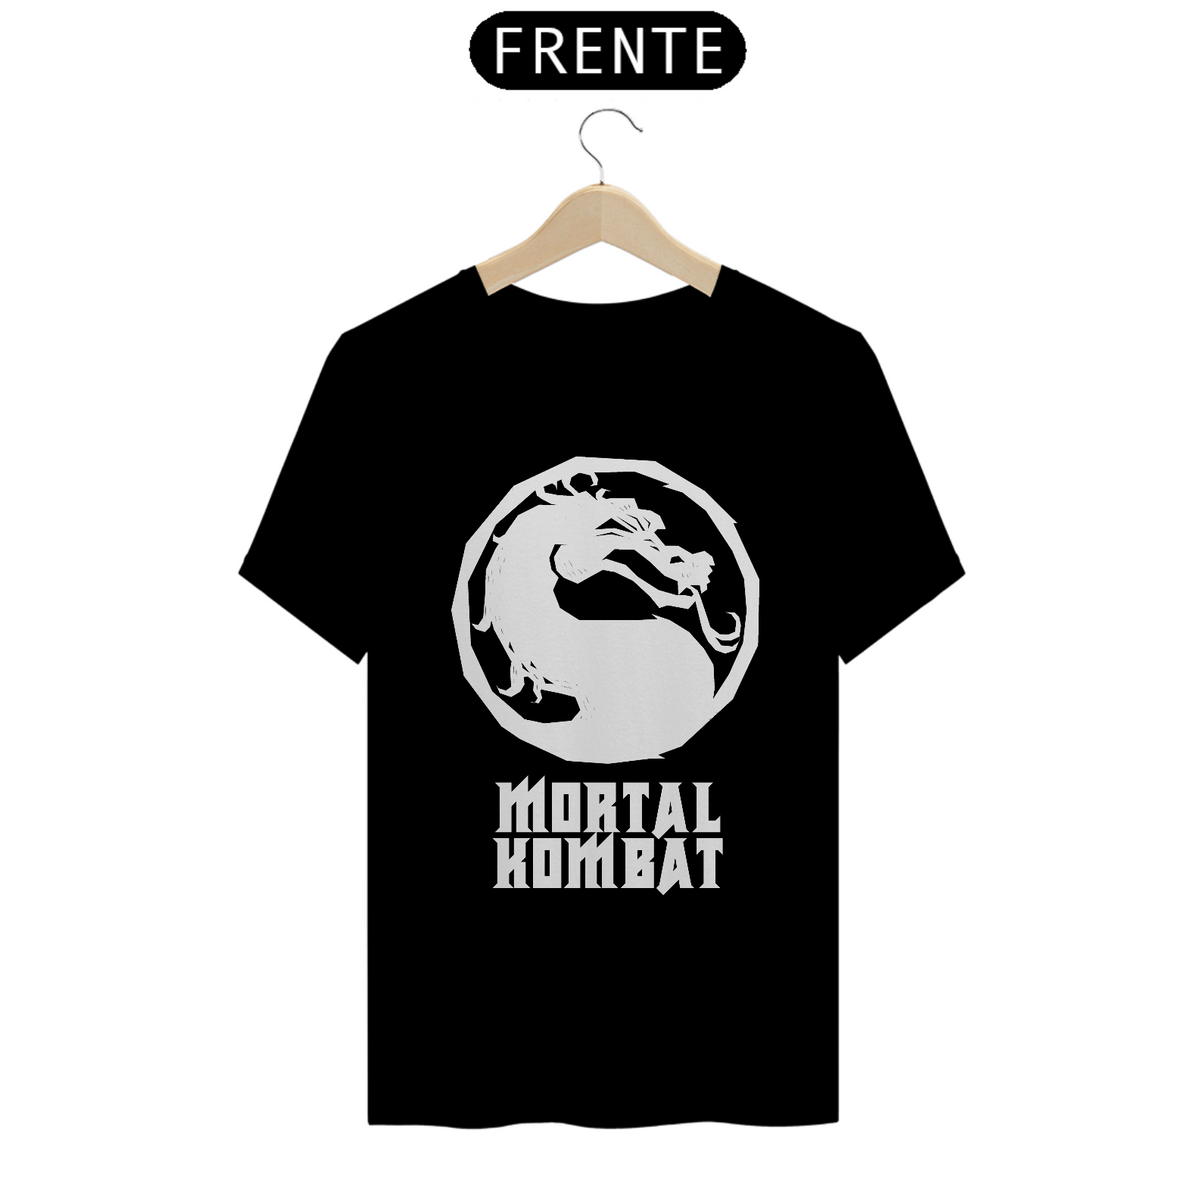 Nome do produto: Mortal Kombat